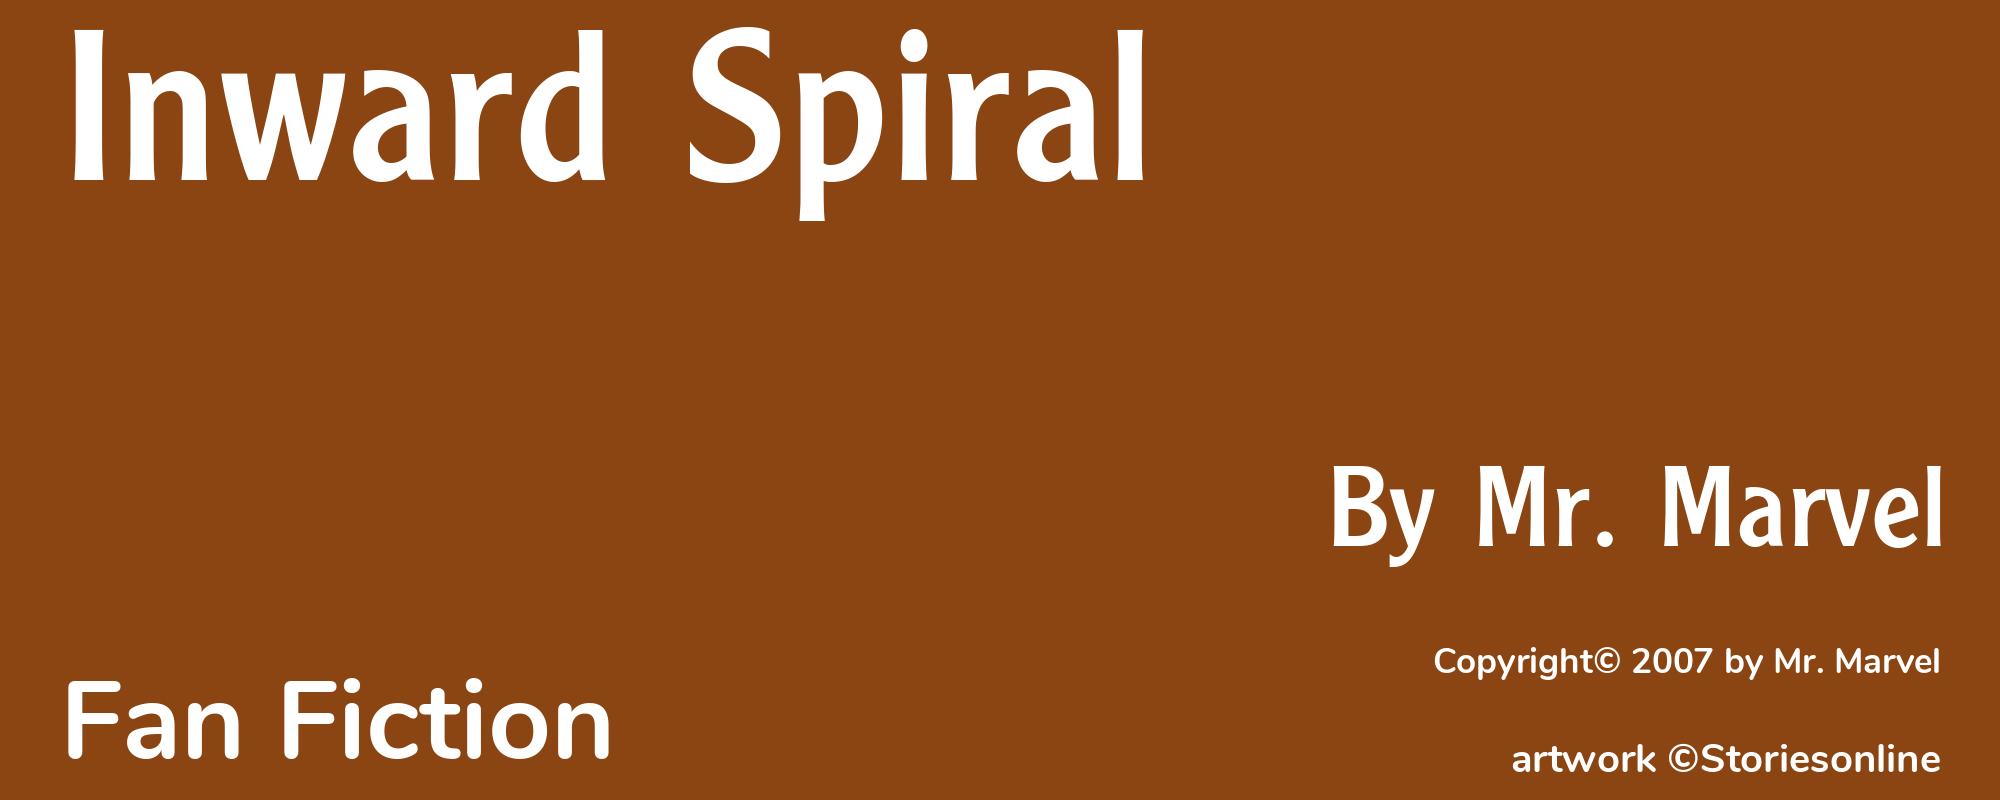 Inward Spiral - Cover